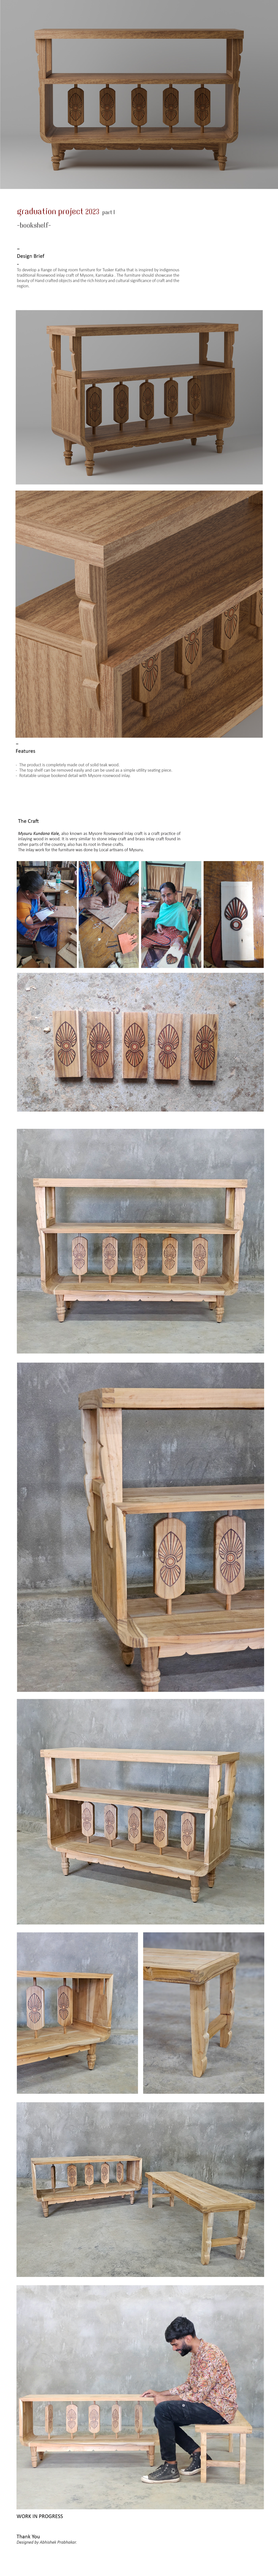 furniture design  craft wood inlay bookshelf design 3d modeling Render